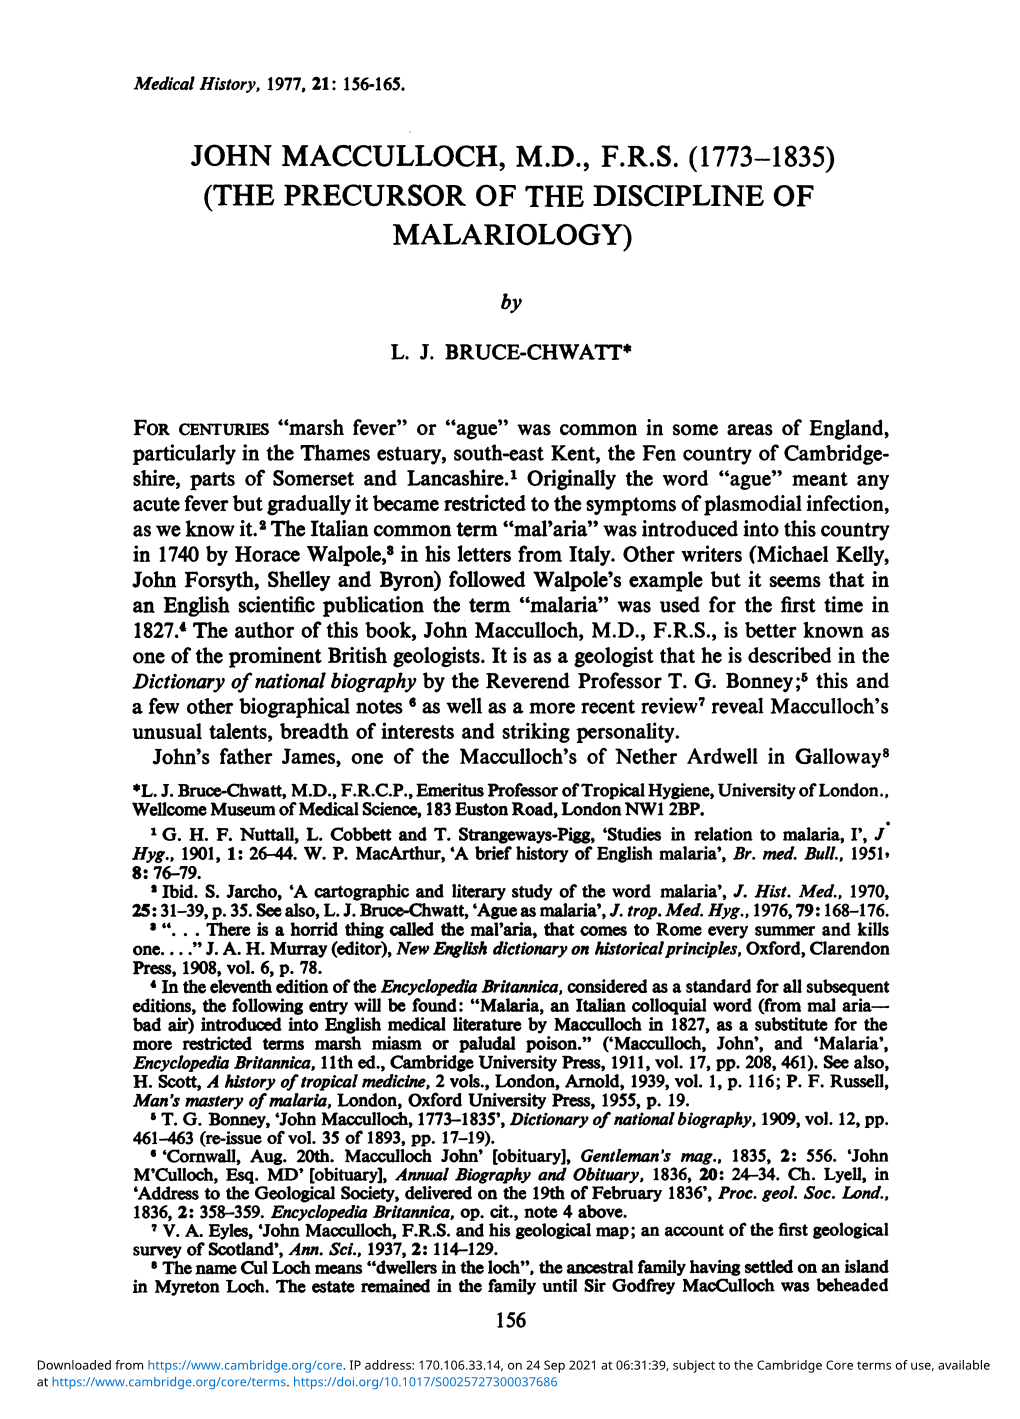 John Macculloch, M.D., F.R.S. (1773-1835) (The Precursor of the Discipline of Malariology)